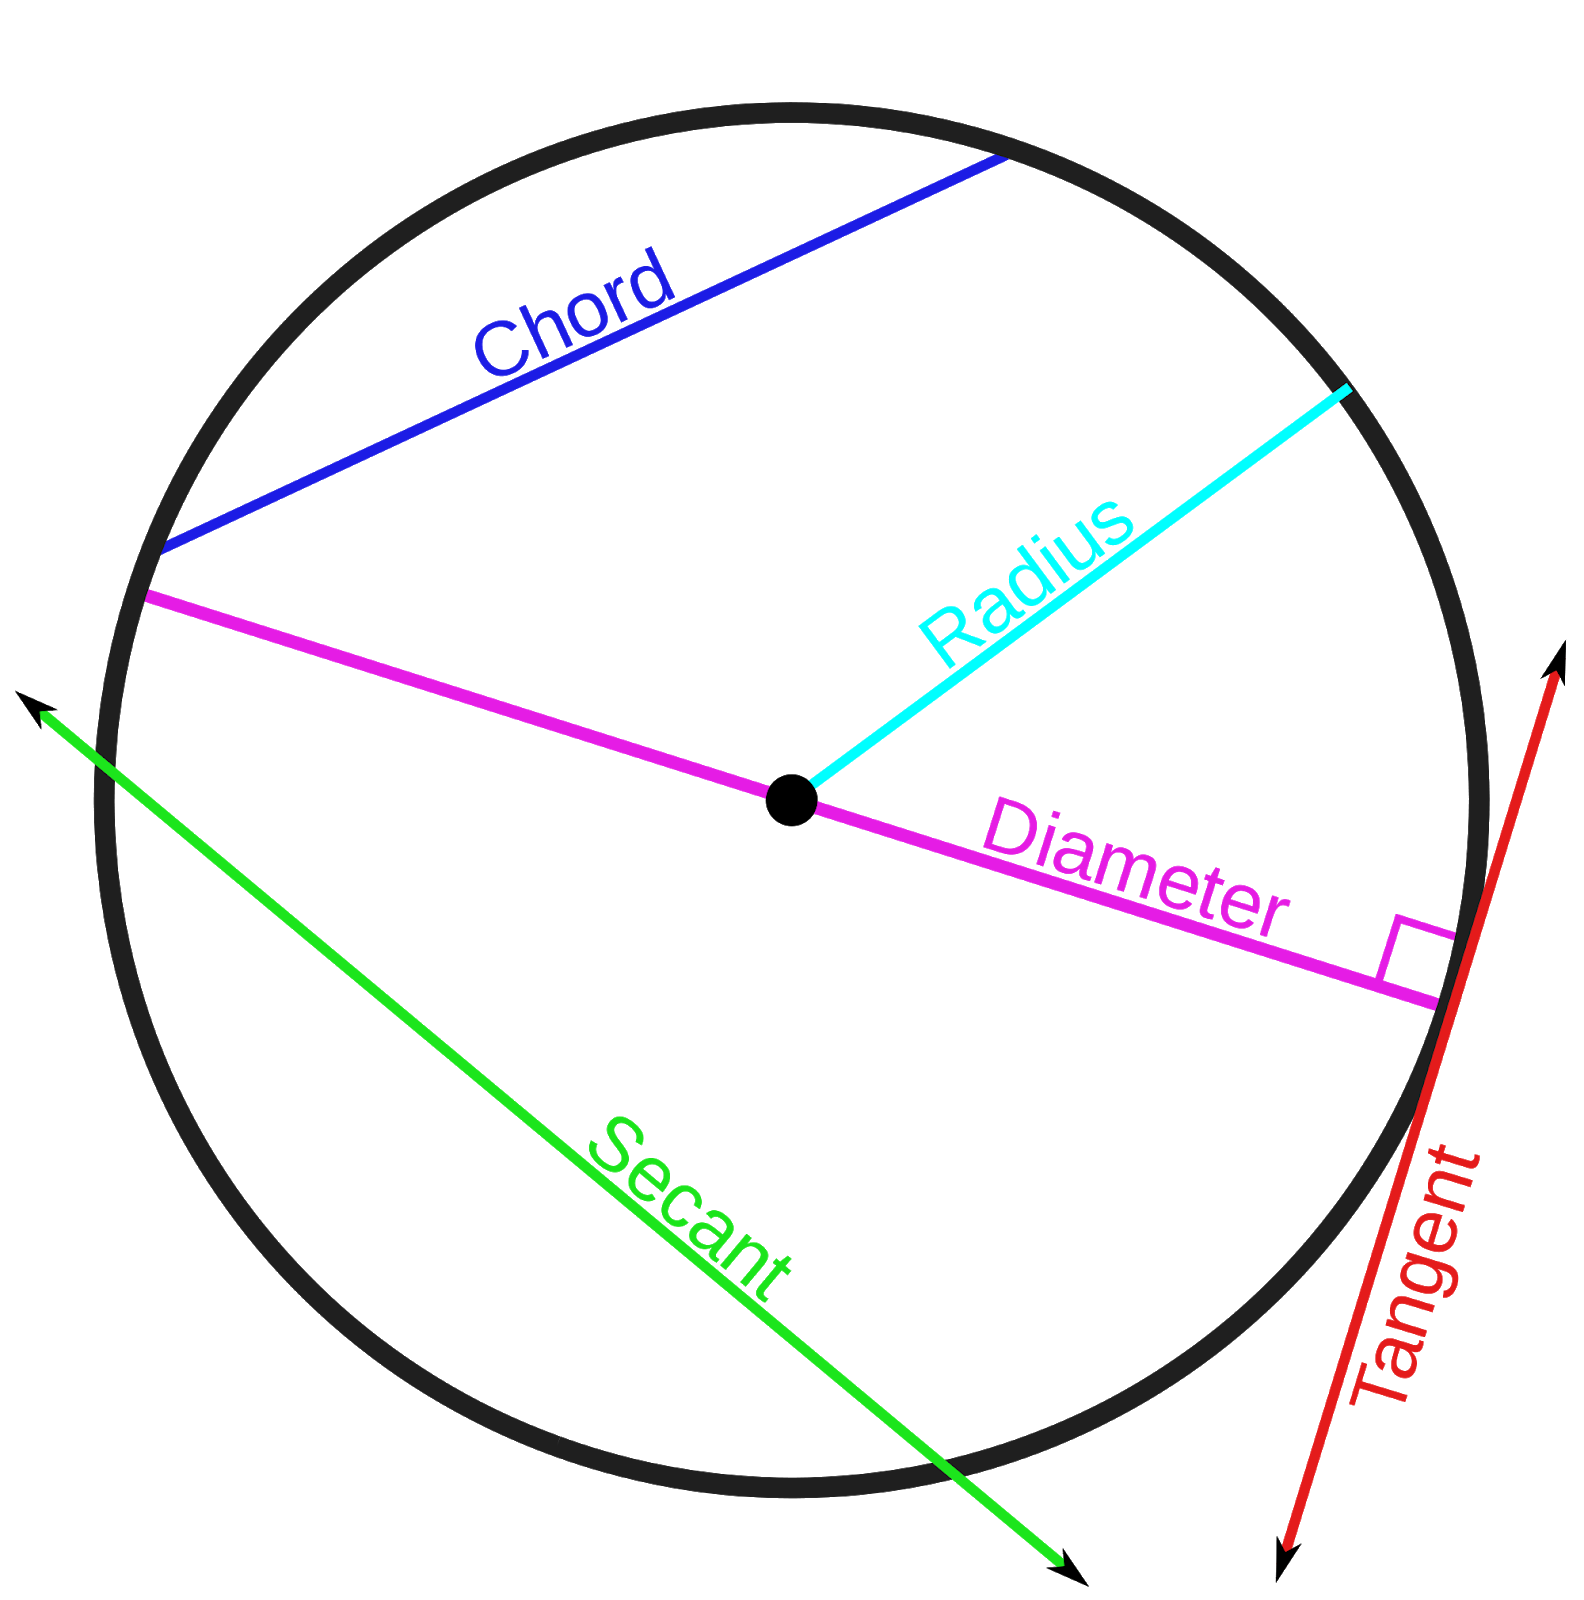 Circles, figure 1